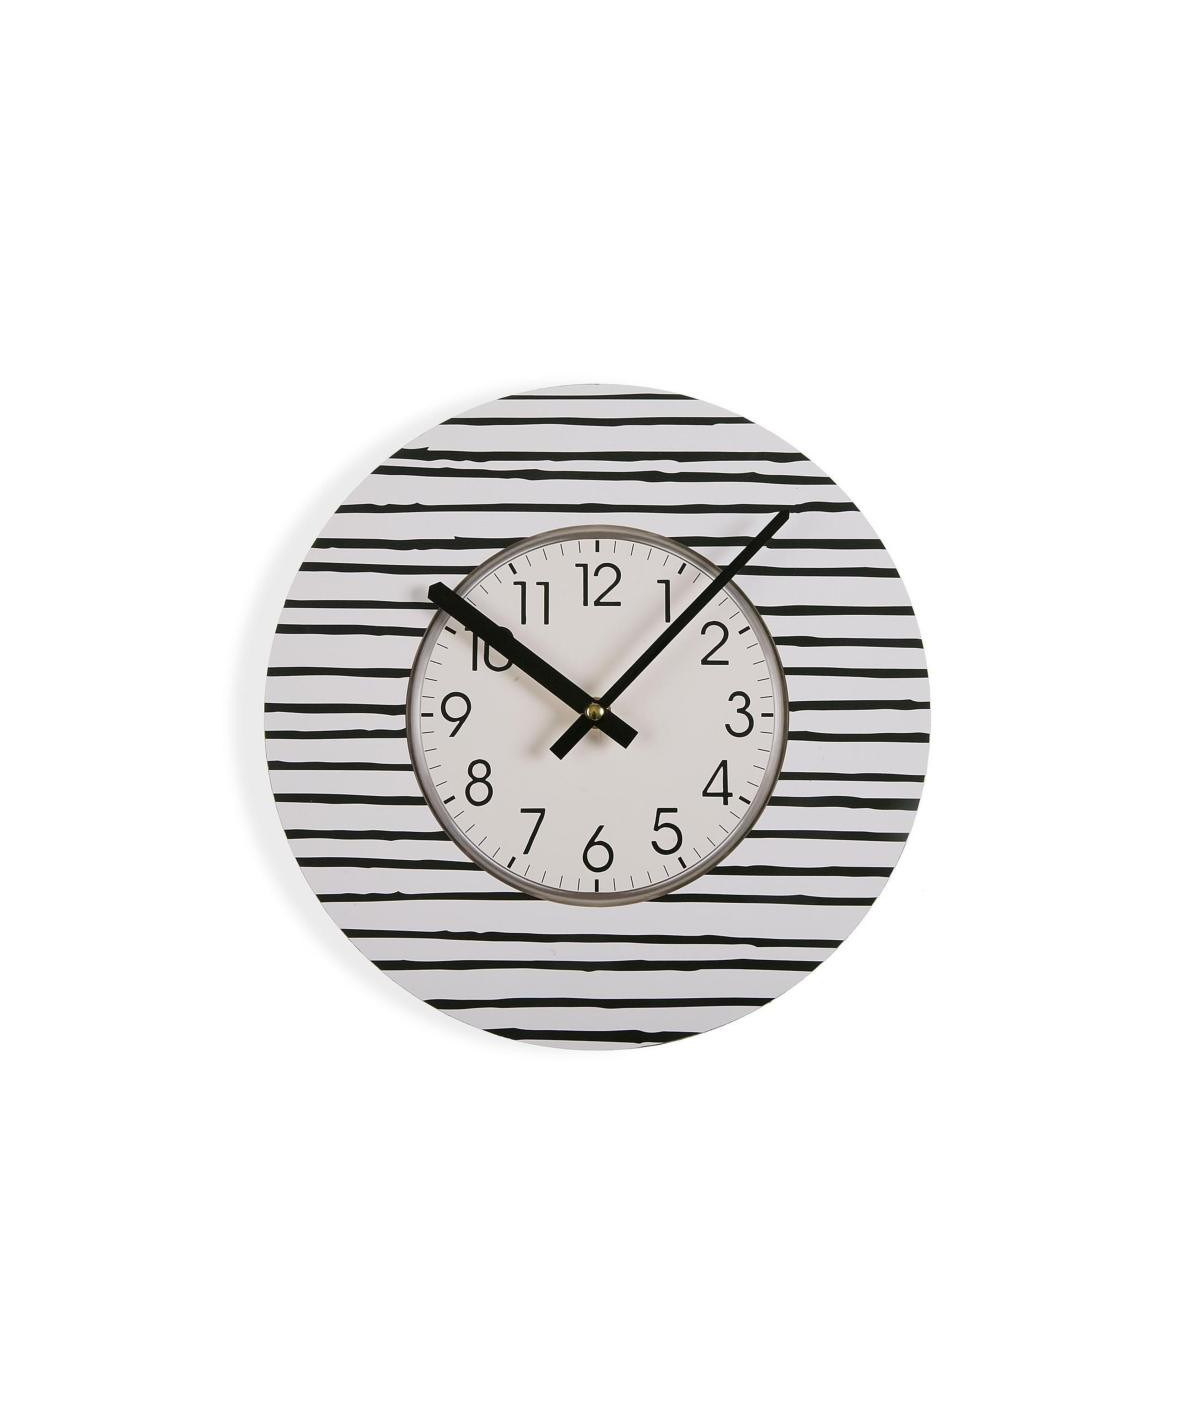 Horloge murale rayures noir et blanc Diam29cm - Line |YESDEKO